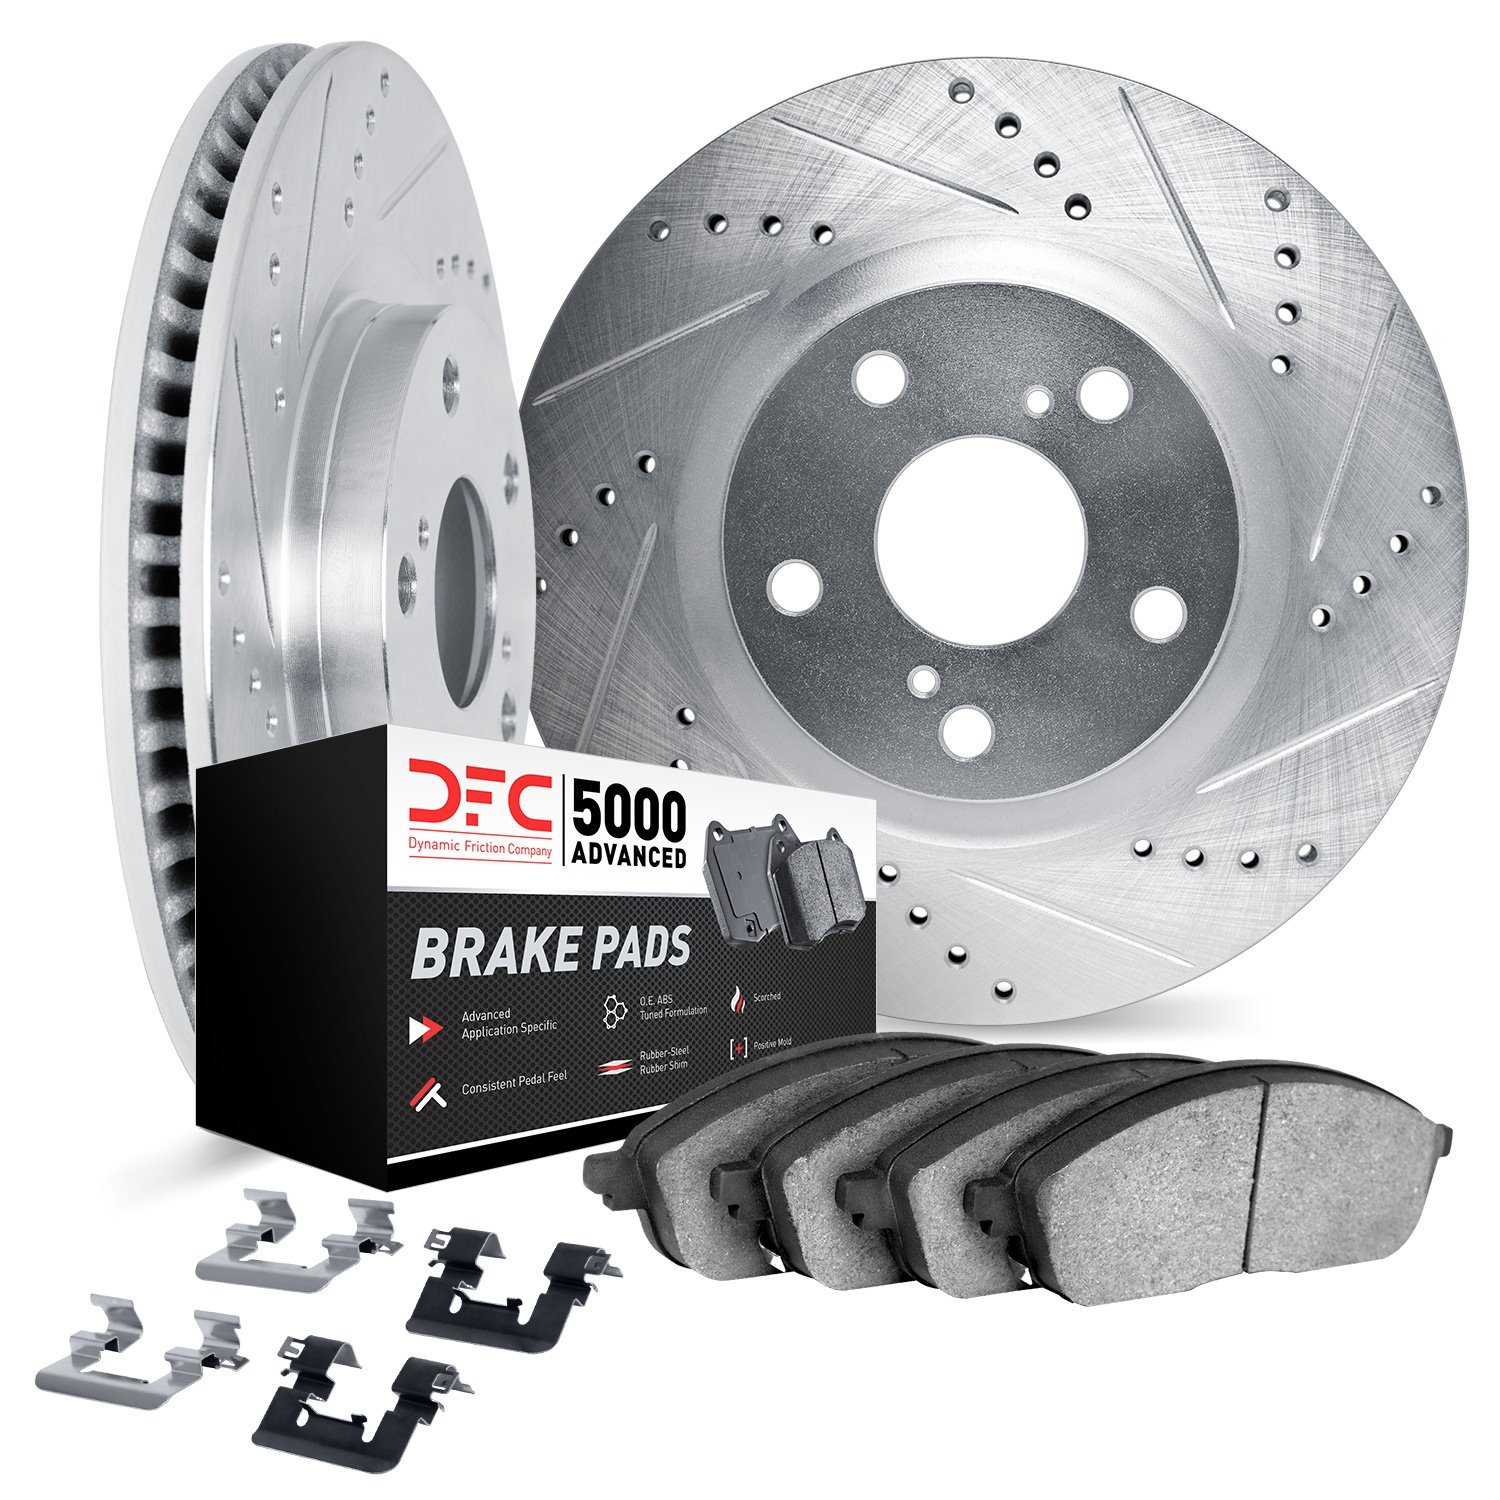 7512-31154 Drilled/Slotted Brake Rotors w/5000 Advanced Brake Pads Kit & Hardware [Silver], Fits Select Multiple Makes/Models, P